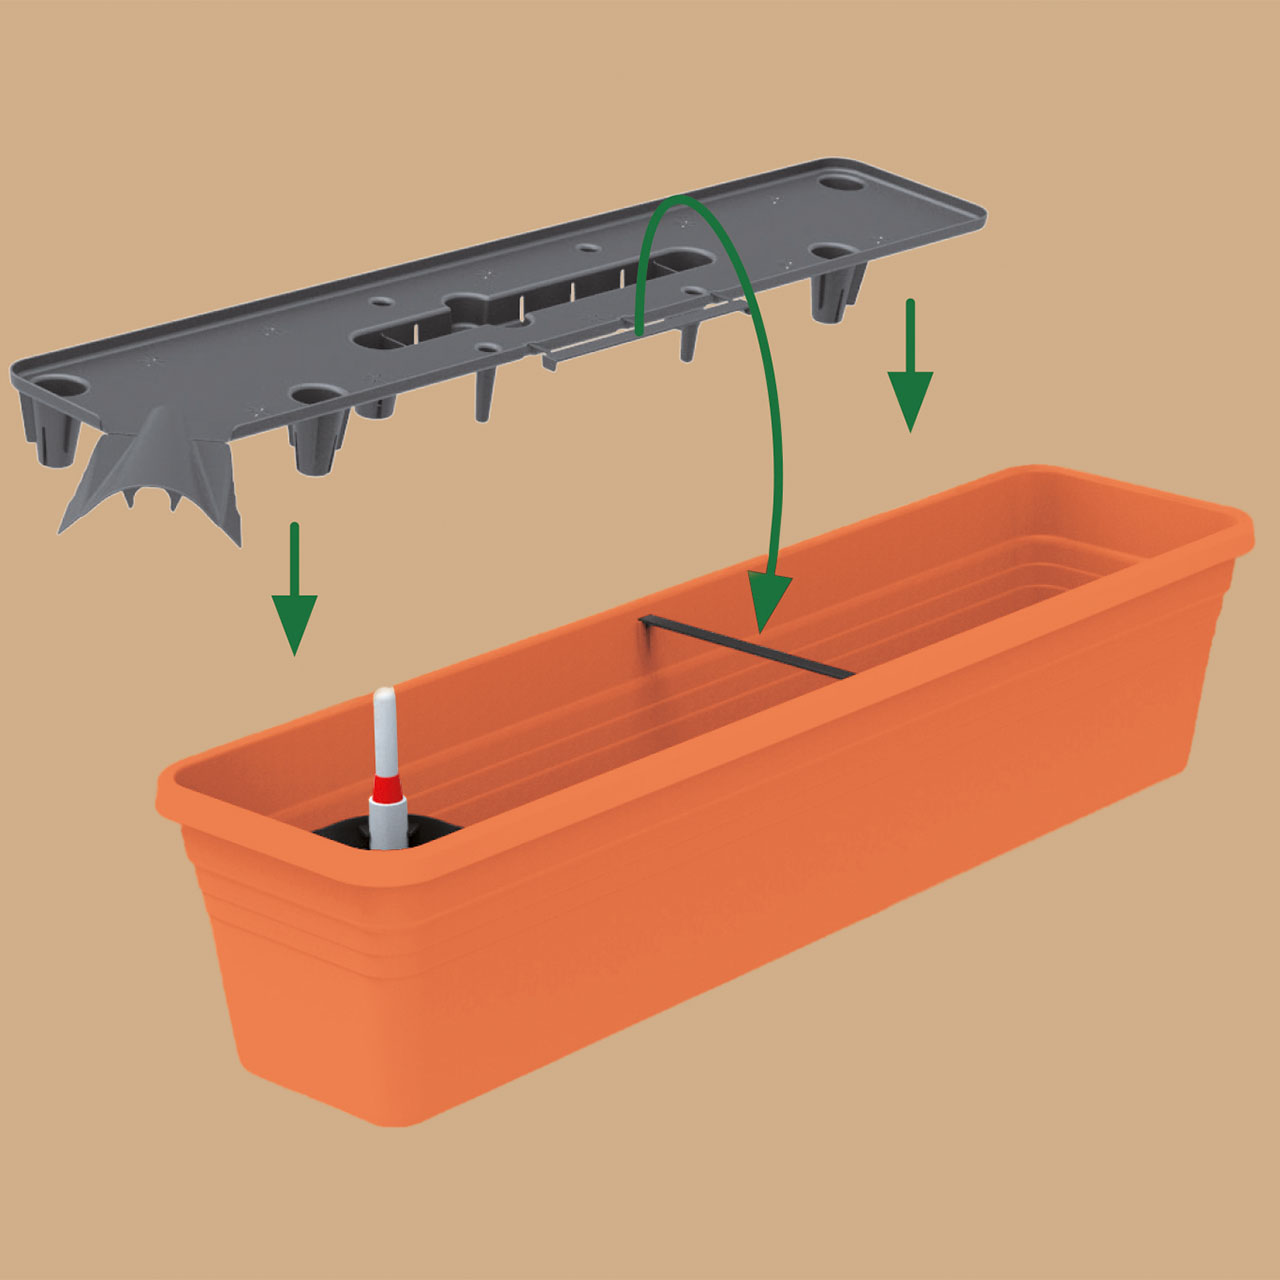 Self-Watering Planter